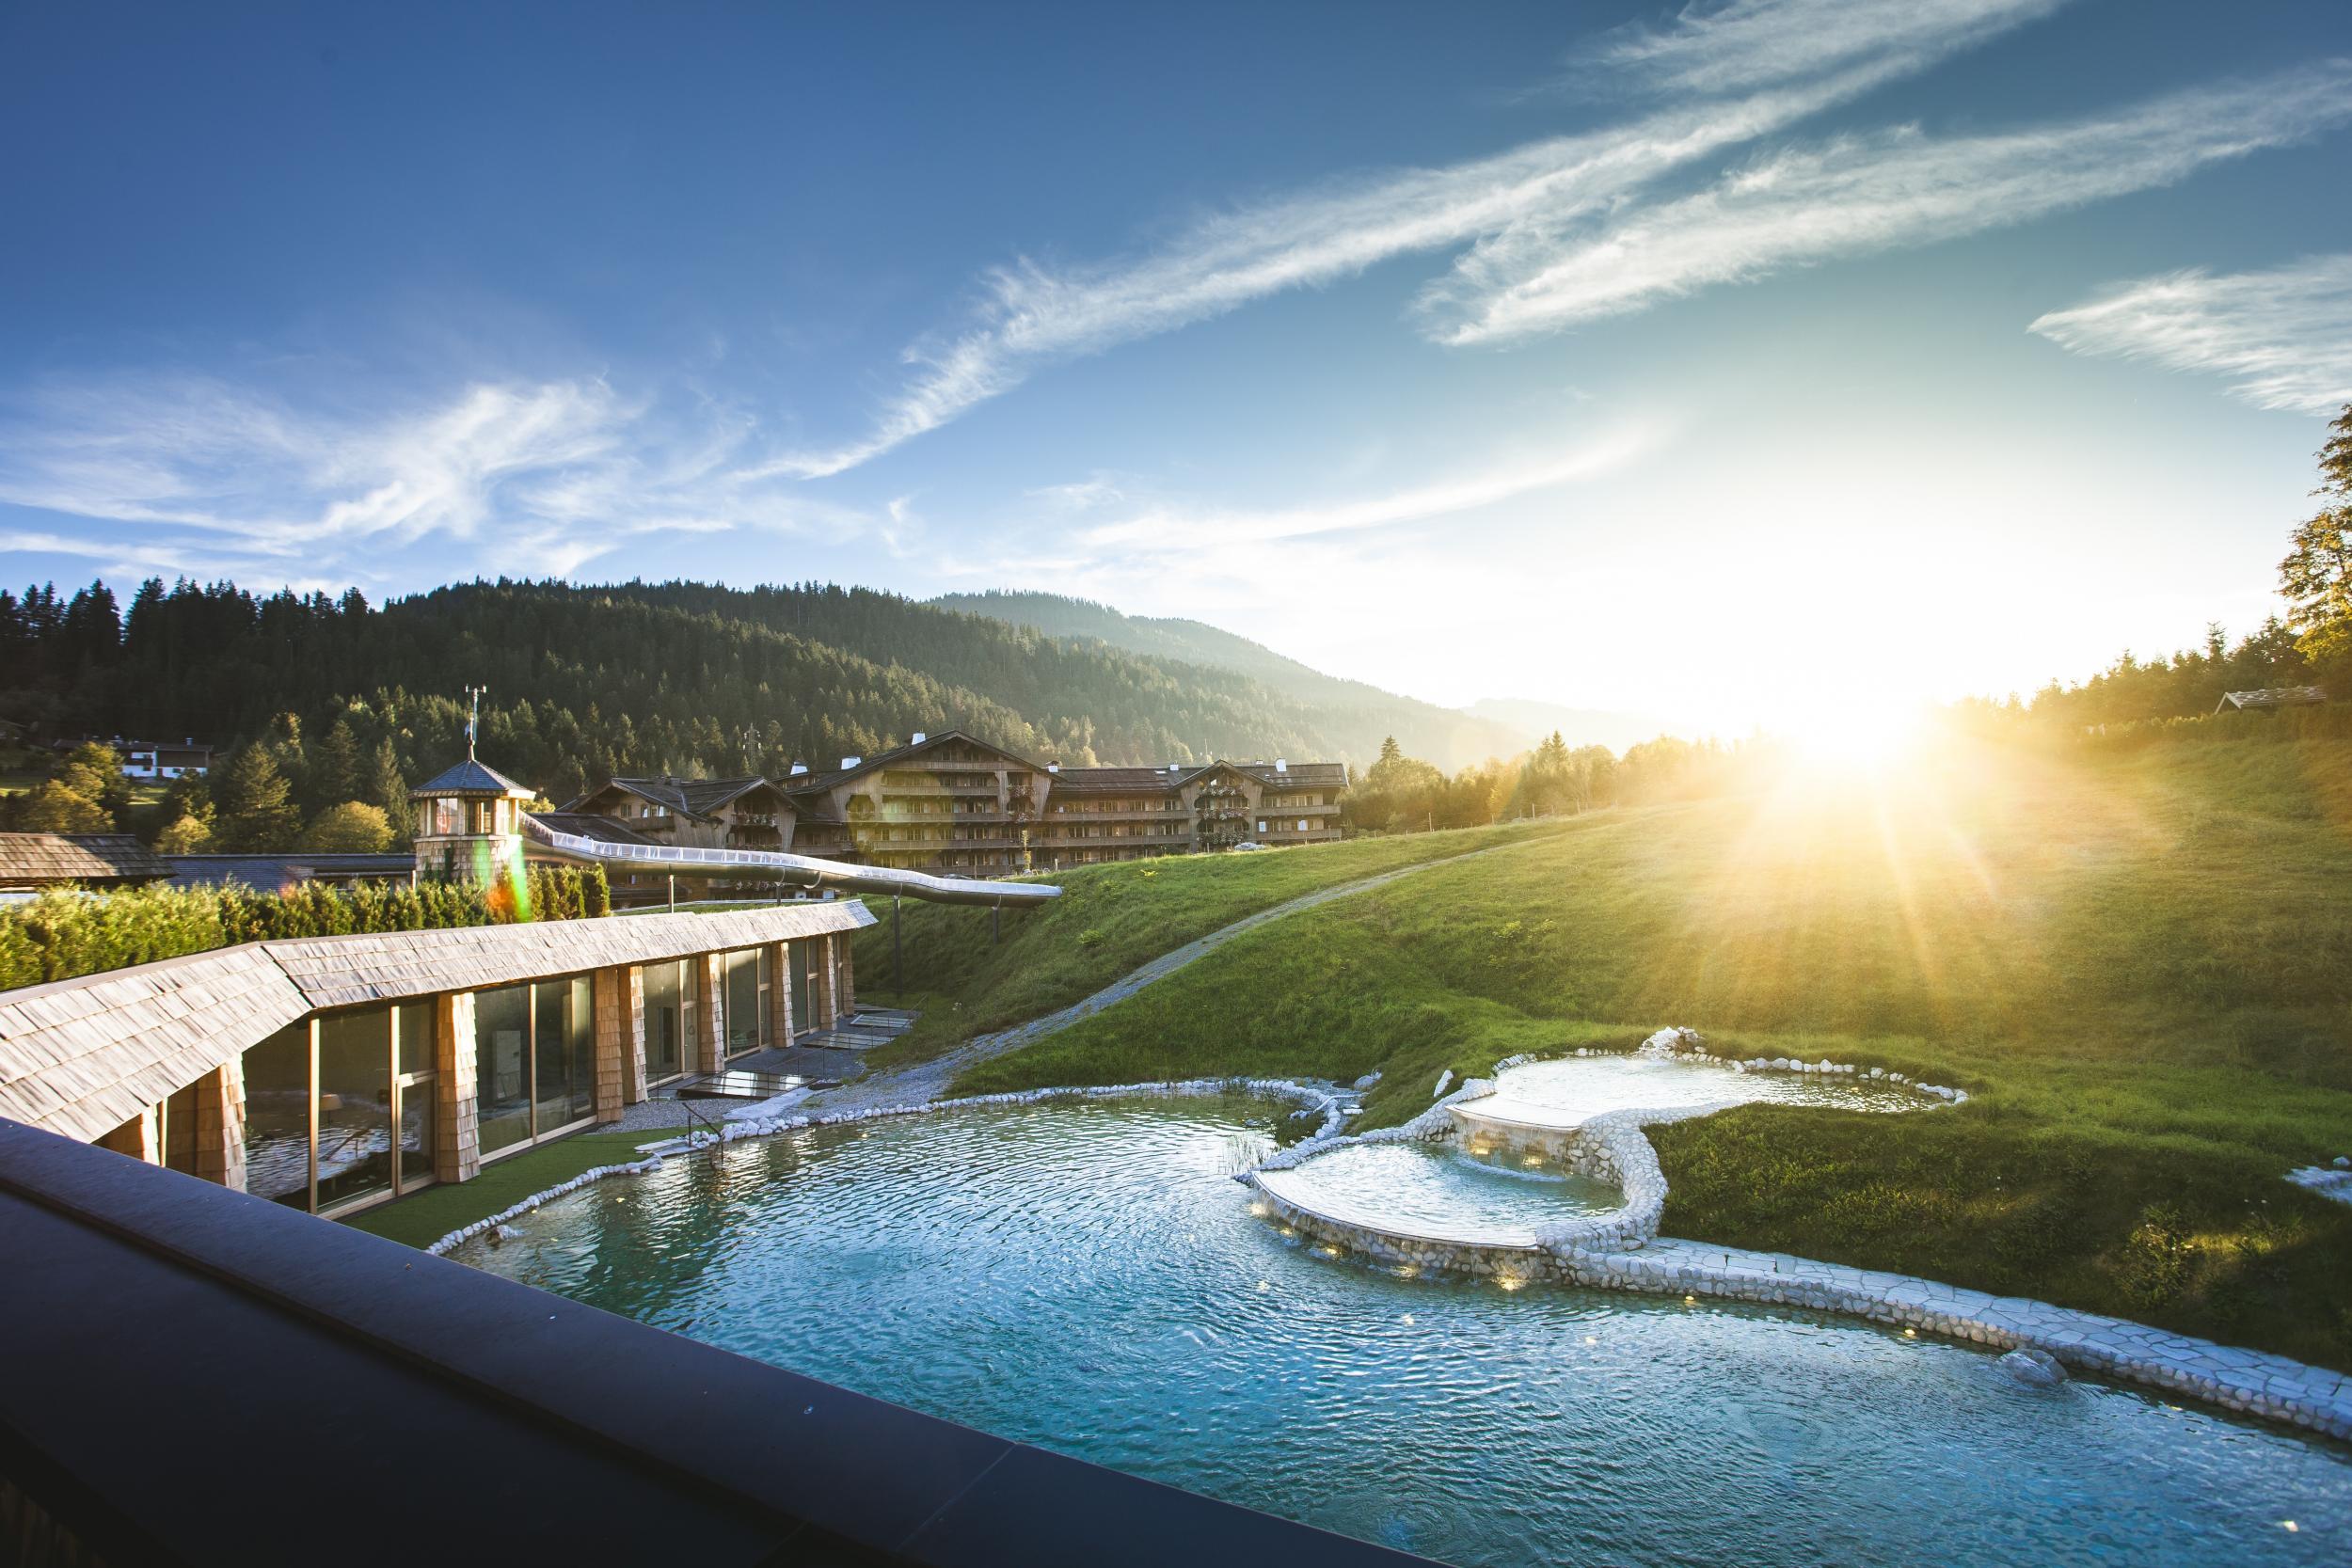 Stay in Austria’s stunning Stanglewirt eco-resort